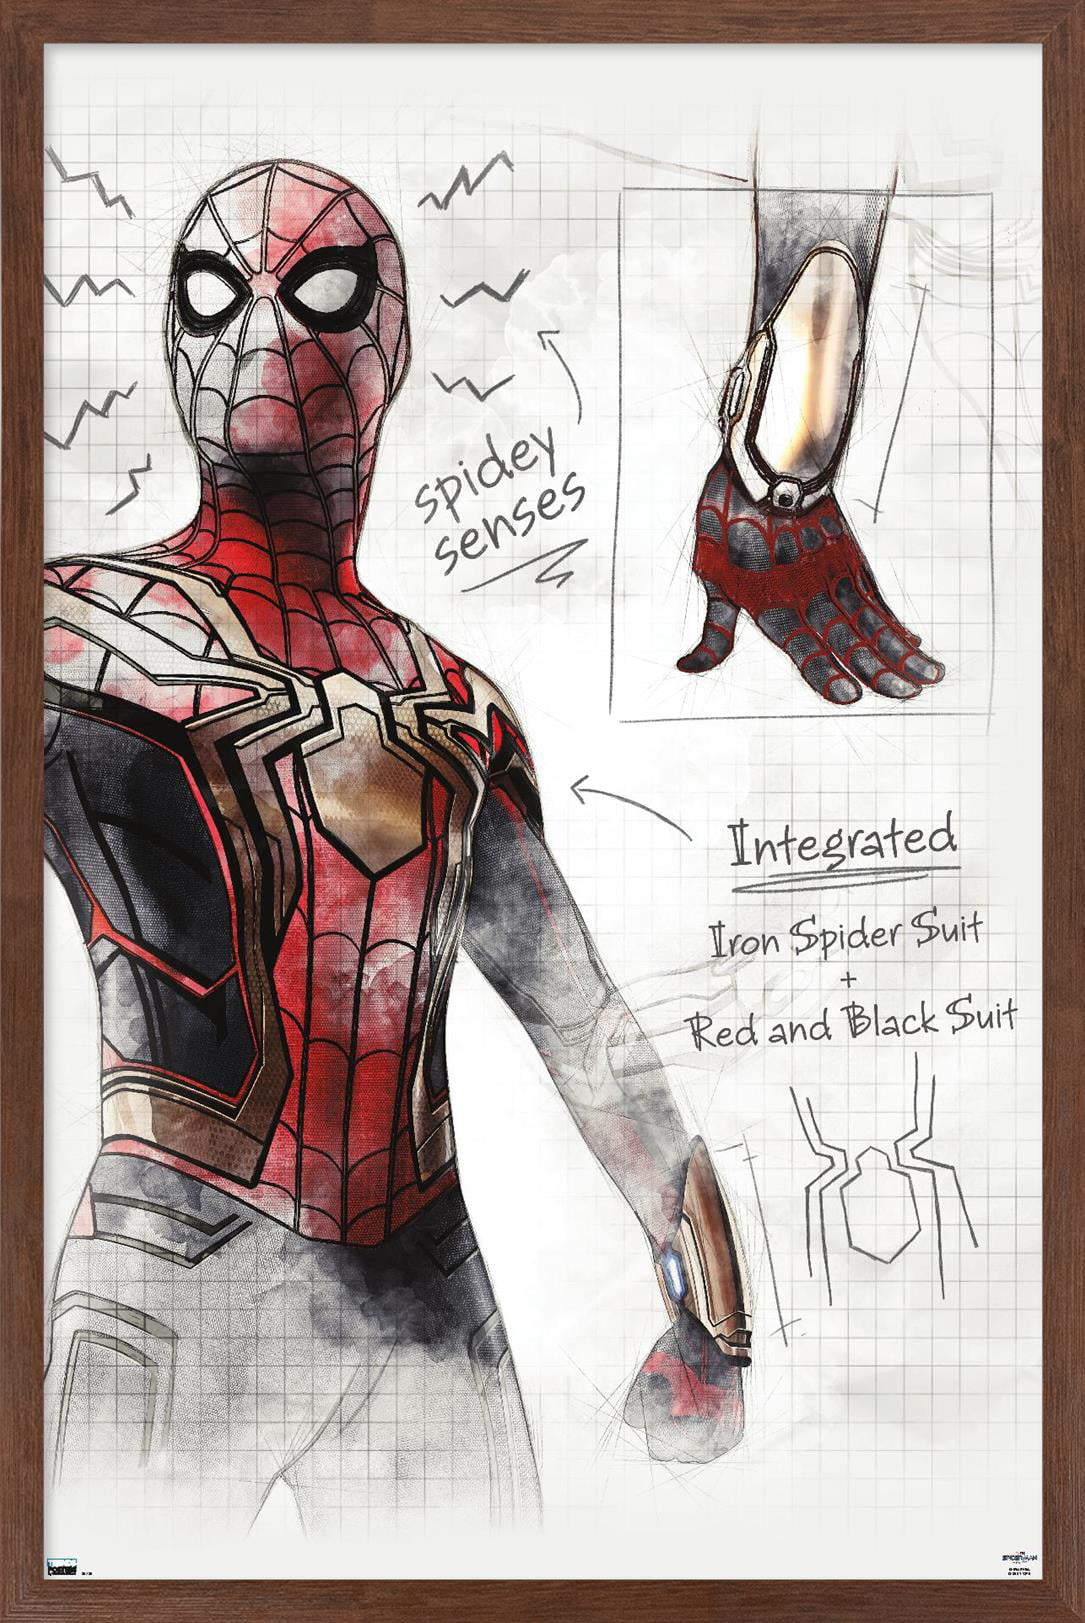 Marvel's Spider-Man: Miles Morales - Suit Wall Poster, 22.375 x 34, Framed